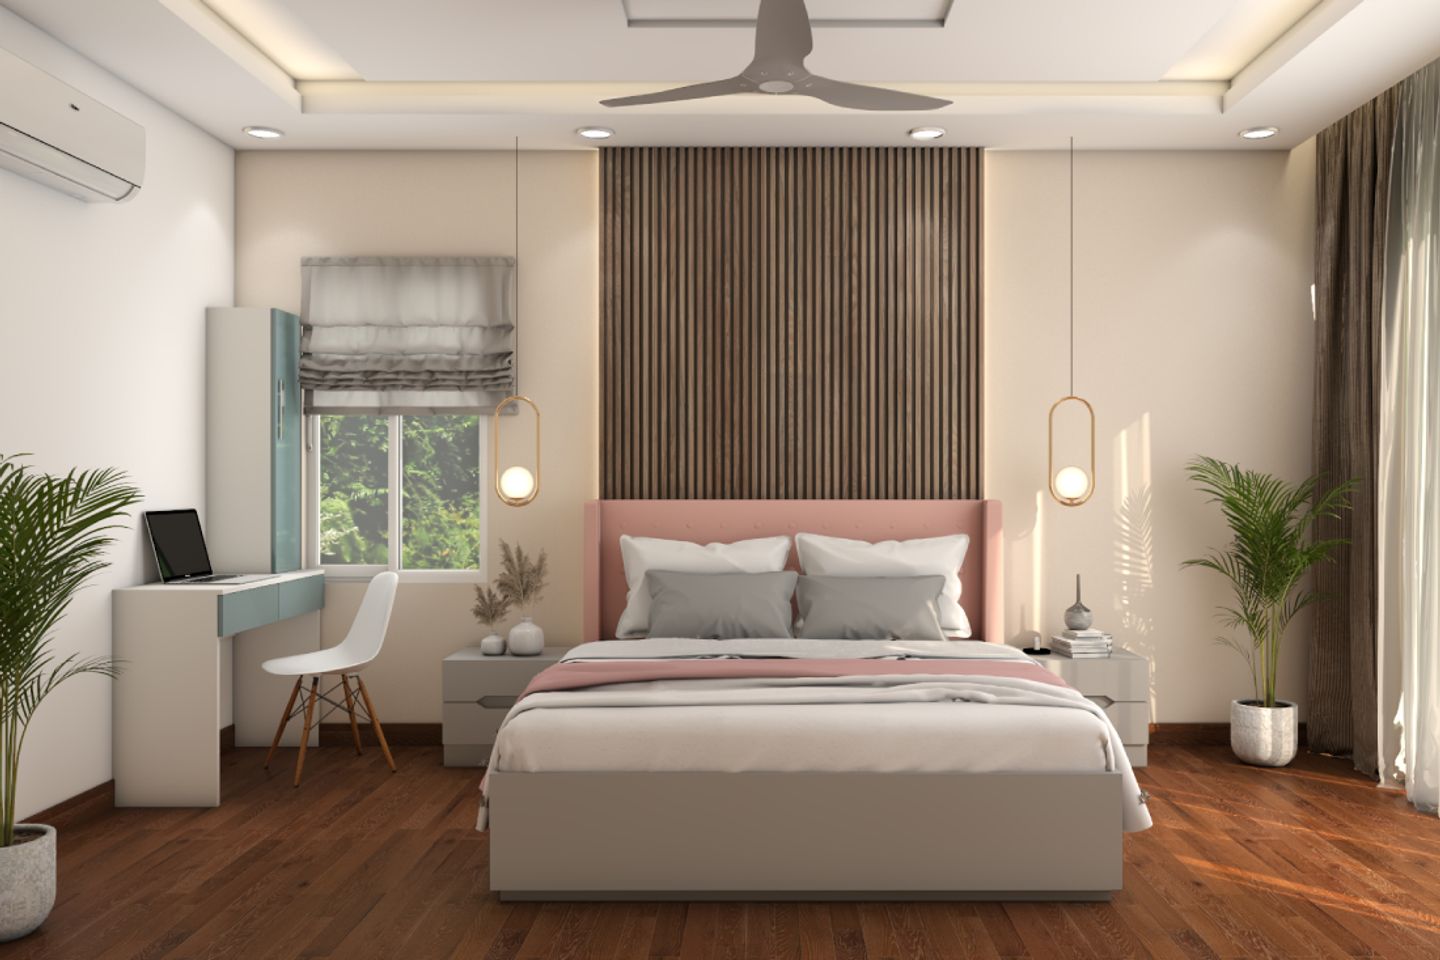 Modern Rectangular Bedroom Tile Design With Laminated Wood Finish